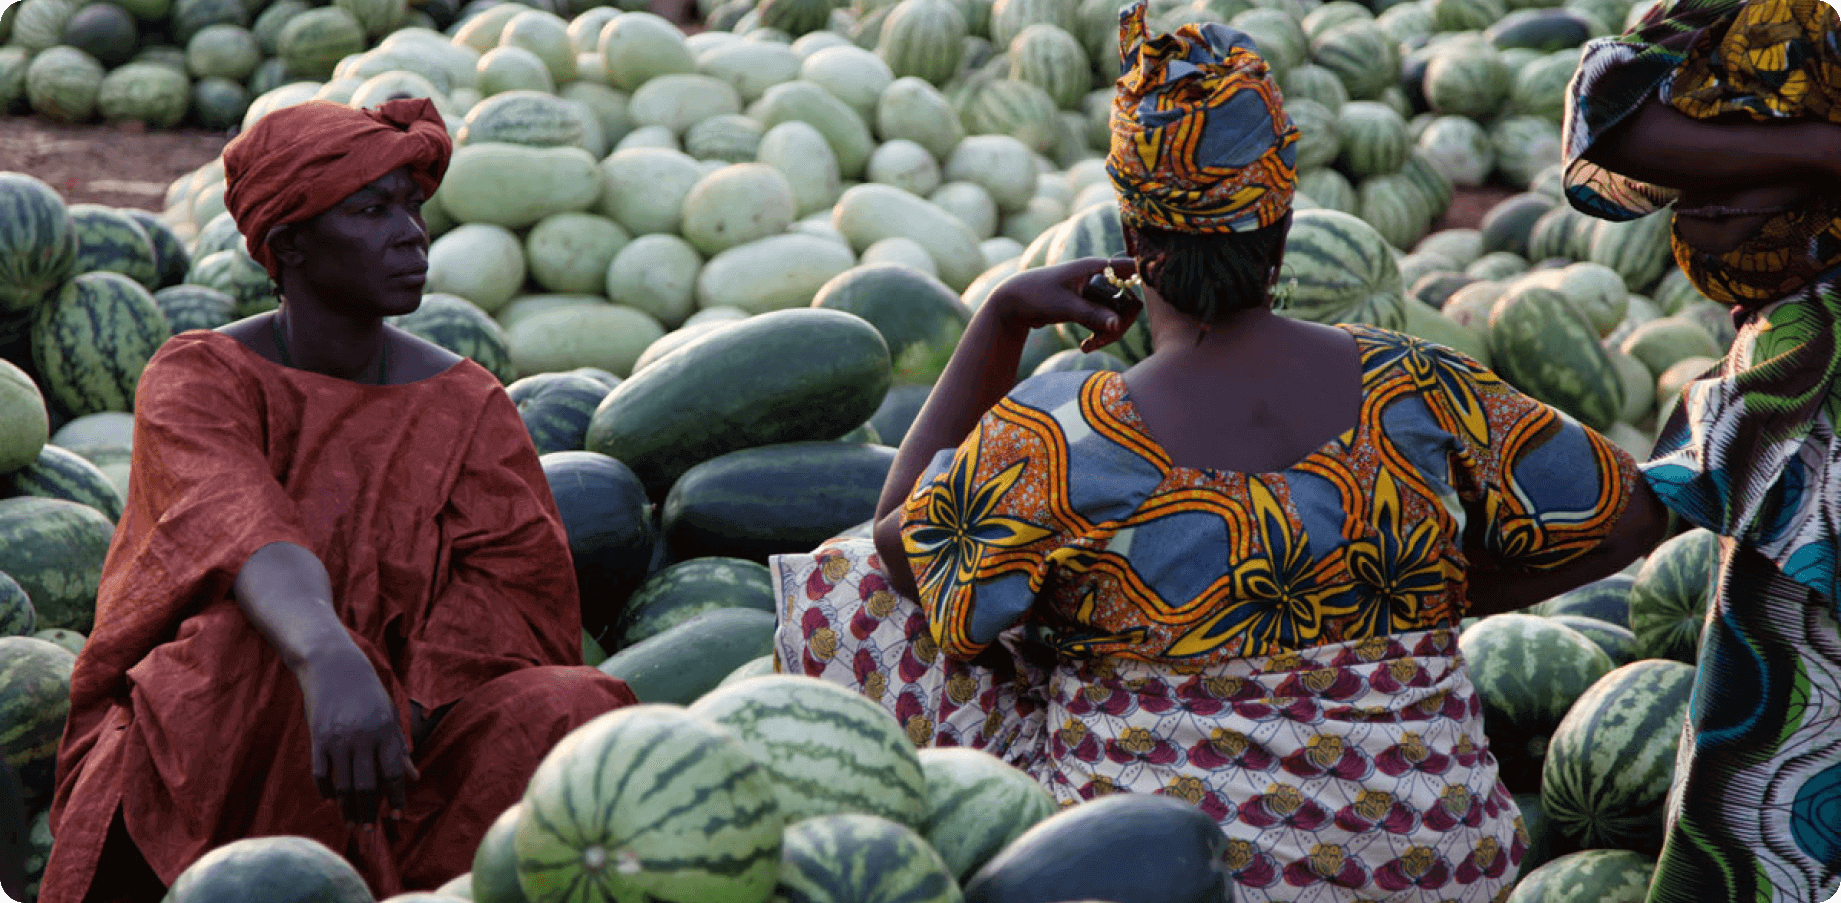 African women among heaps of watermelons